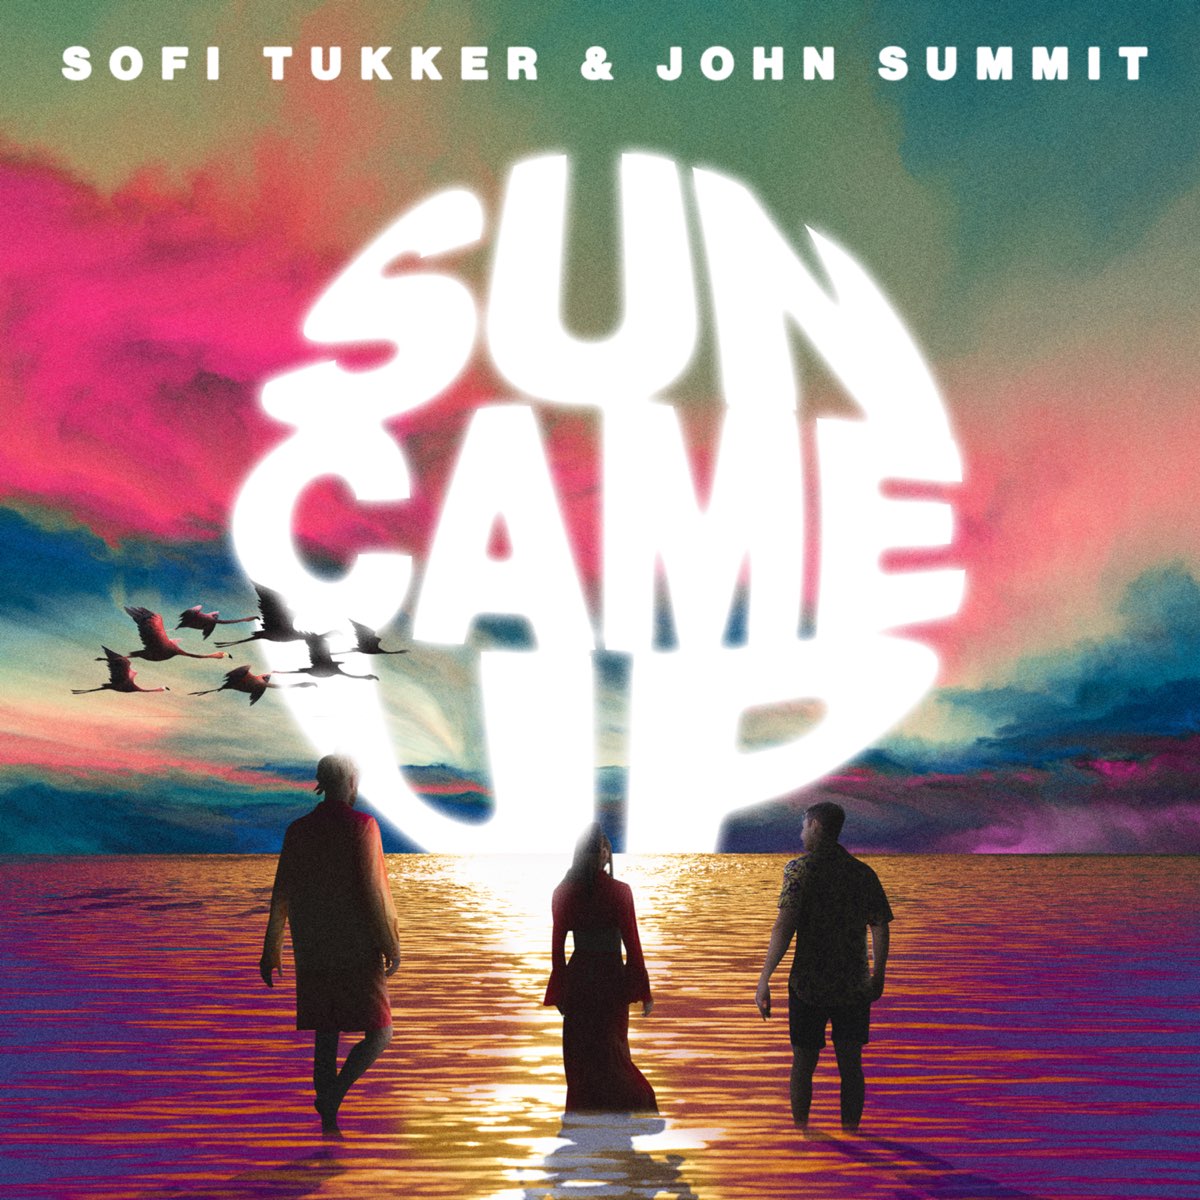 Sofi Tukker & John Summit — Sun Came Up cover artwork